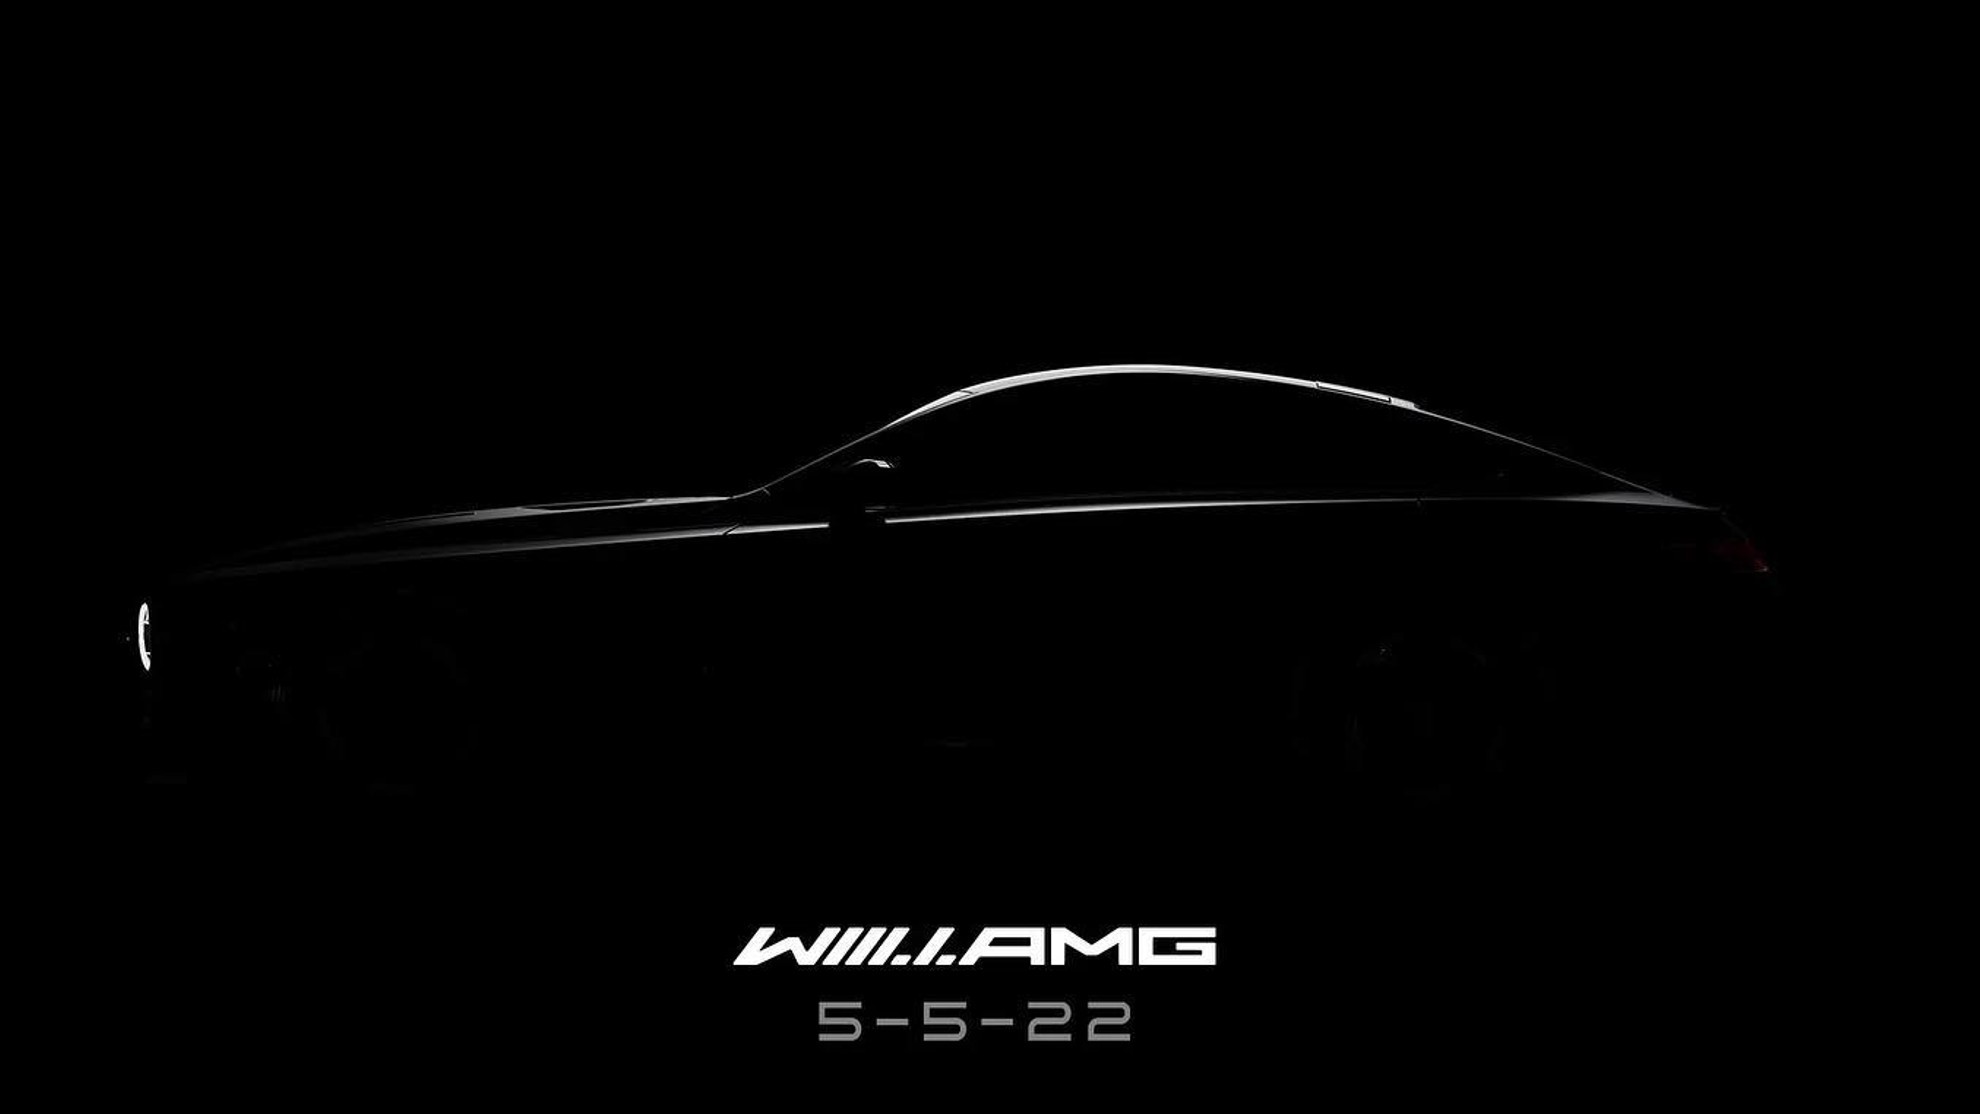 Will.i.am - Mercedes-AMG - will.i.amg - one off - colaboracion - 5 de mayo